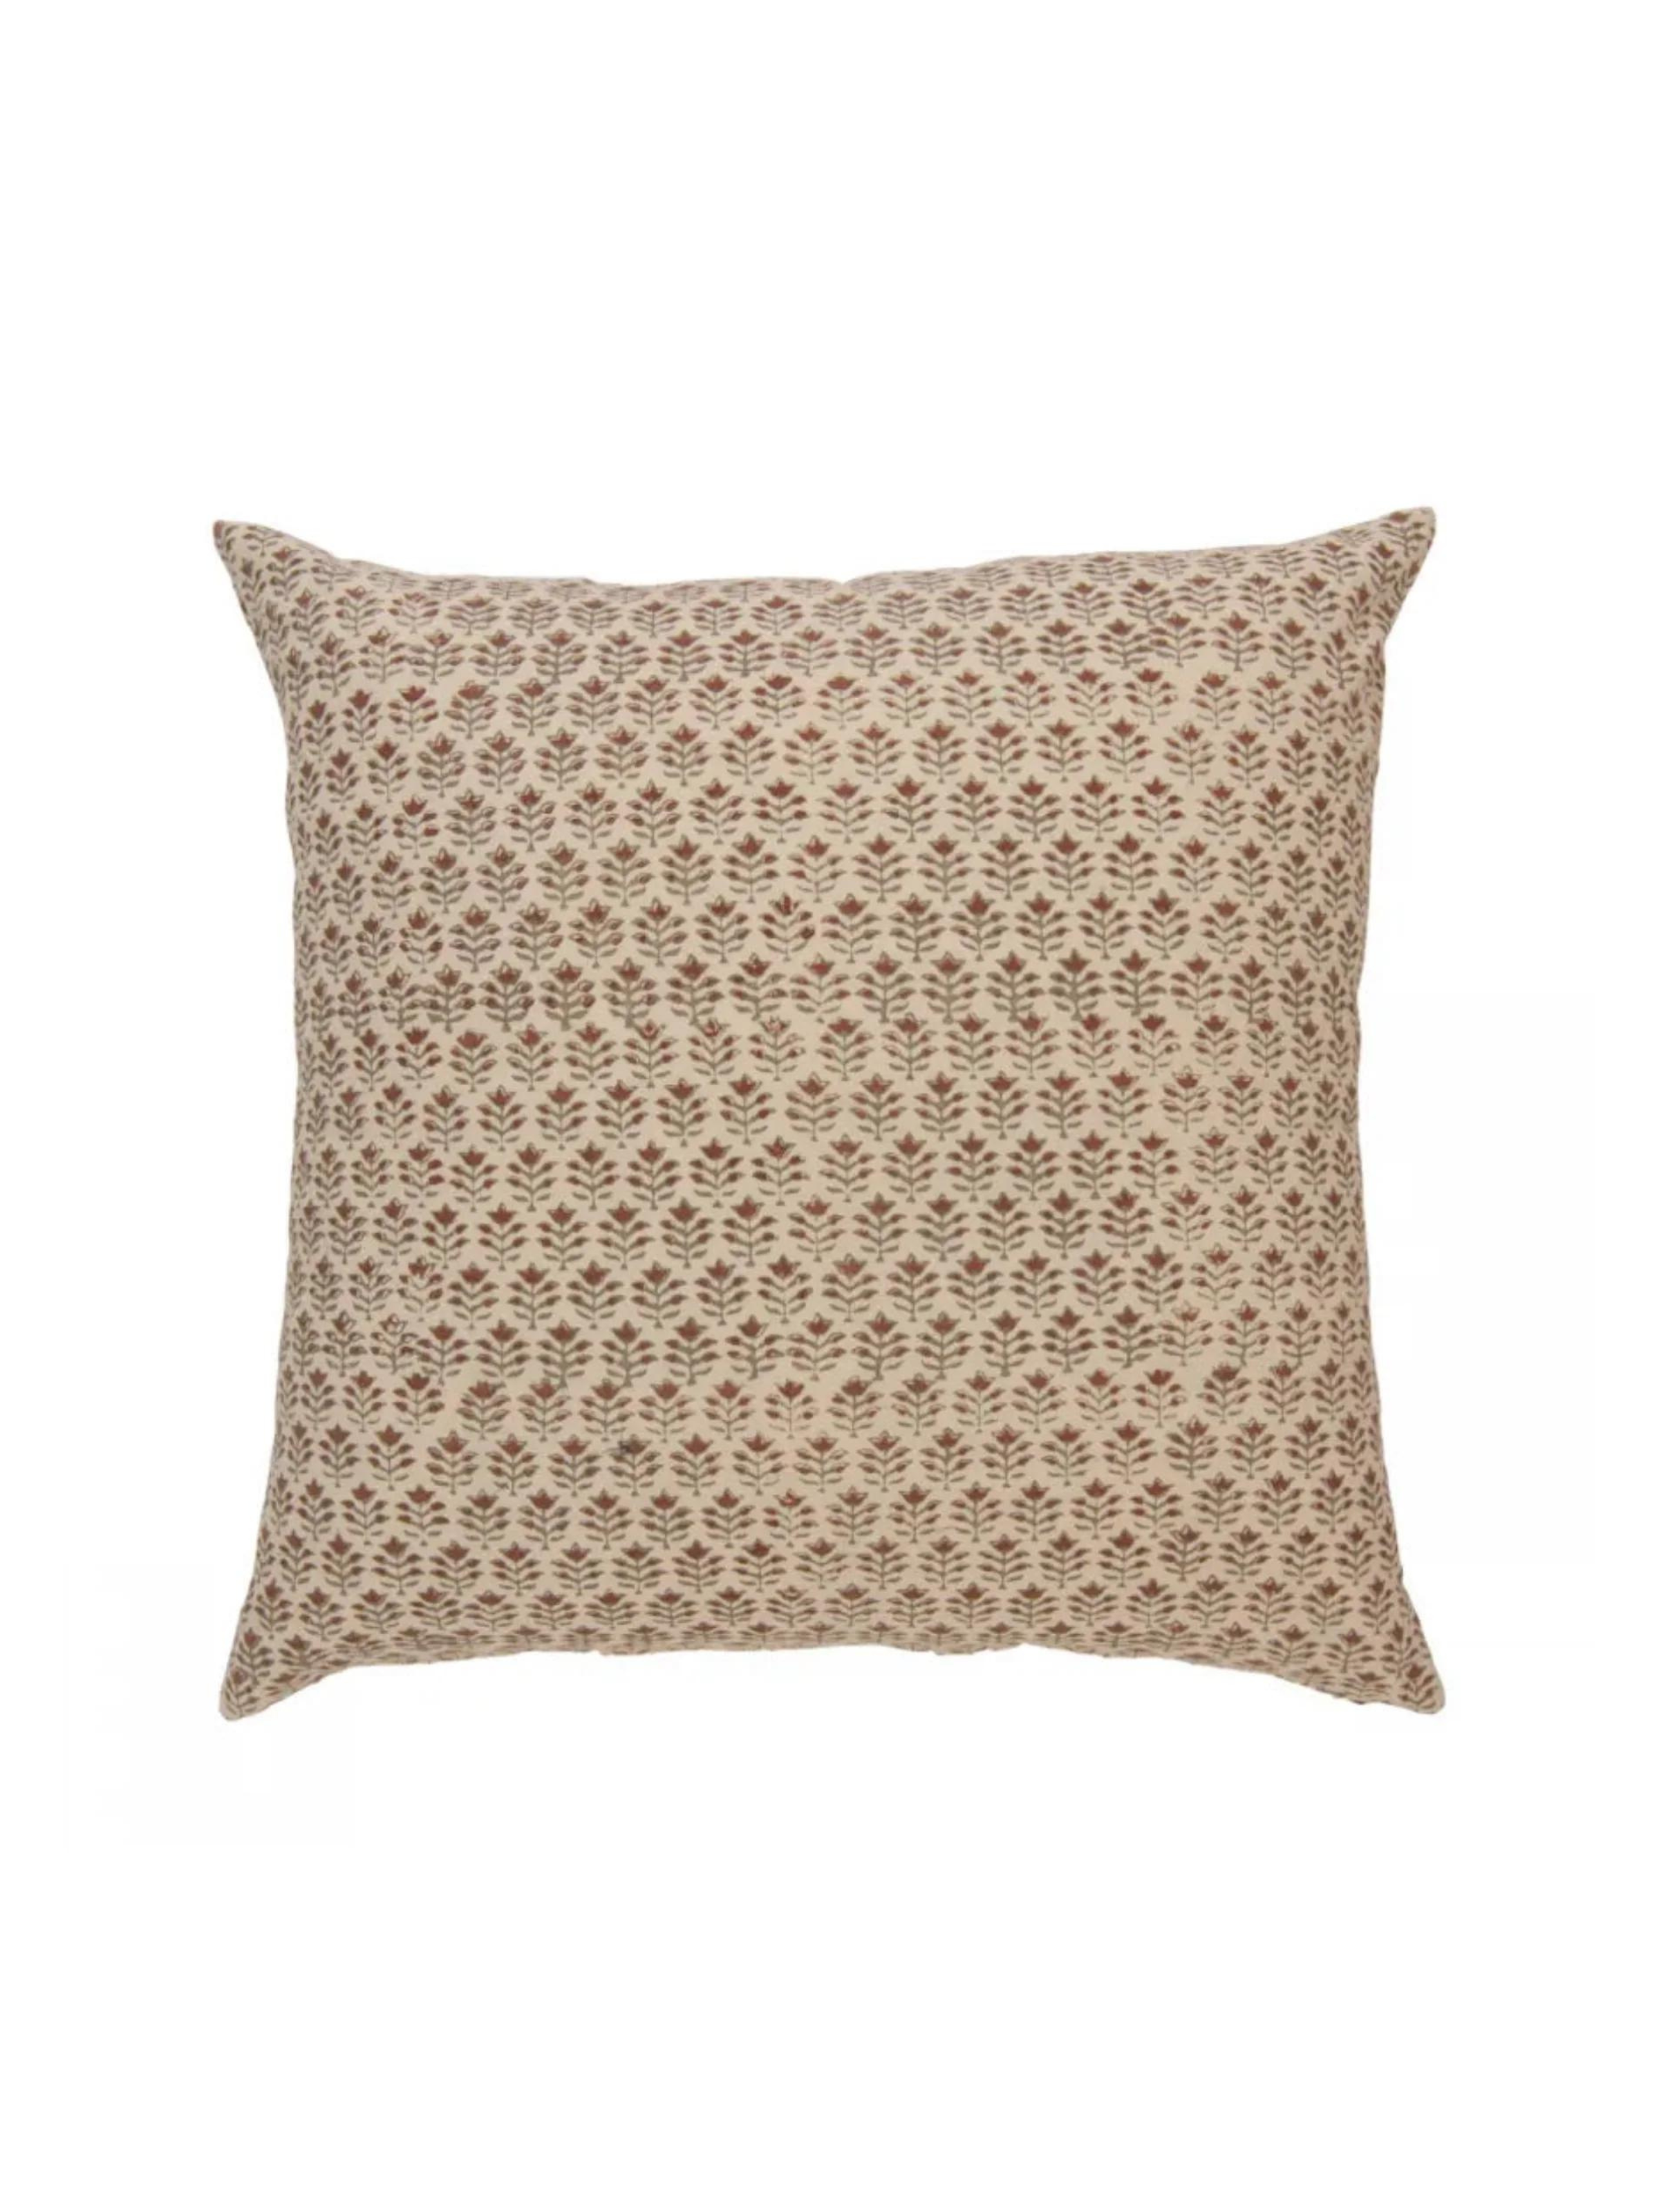 Zanzibar Provence Decorative Pillow